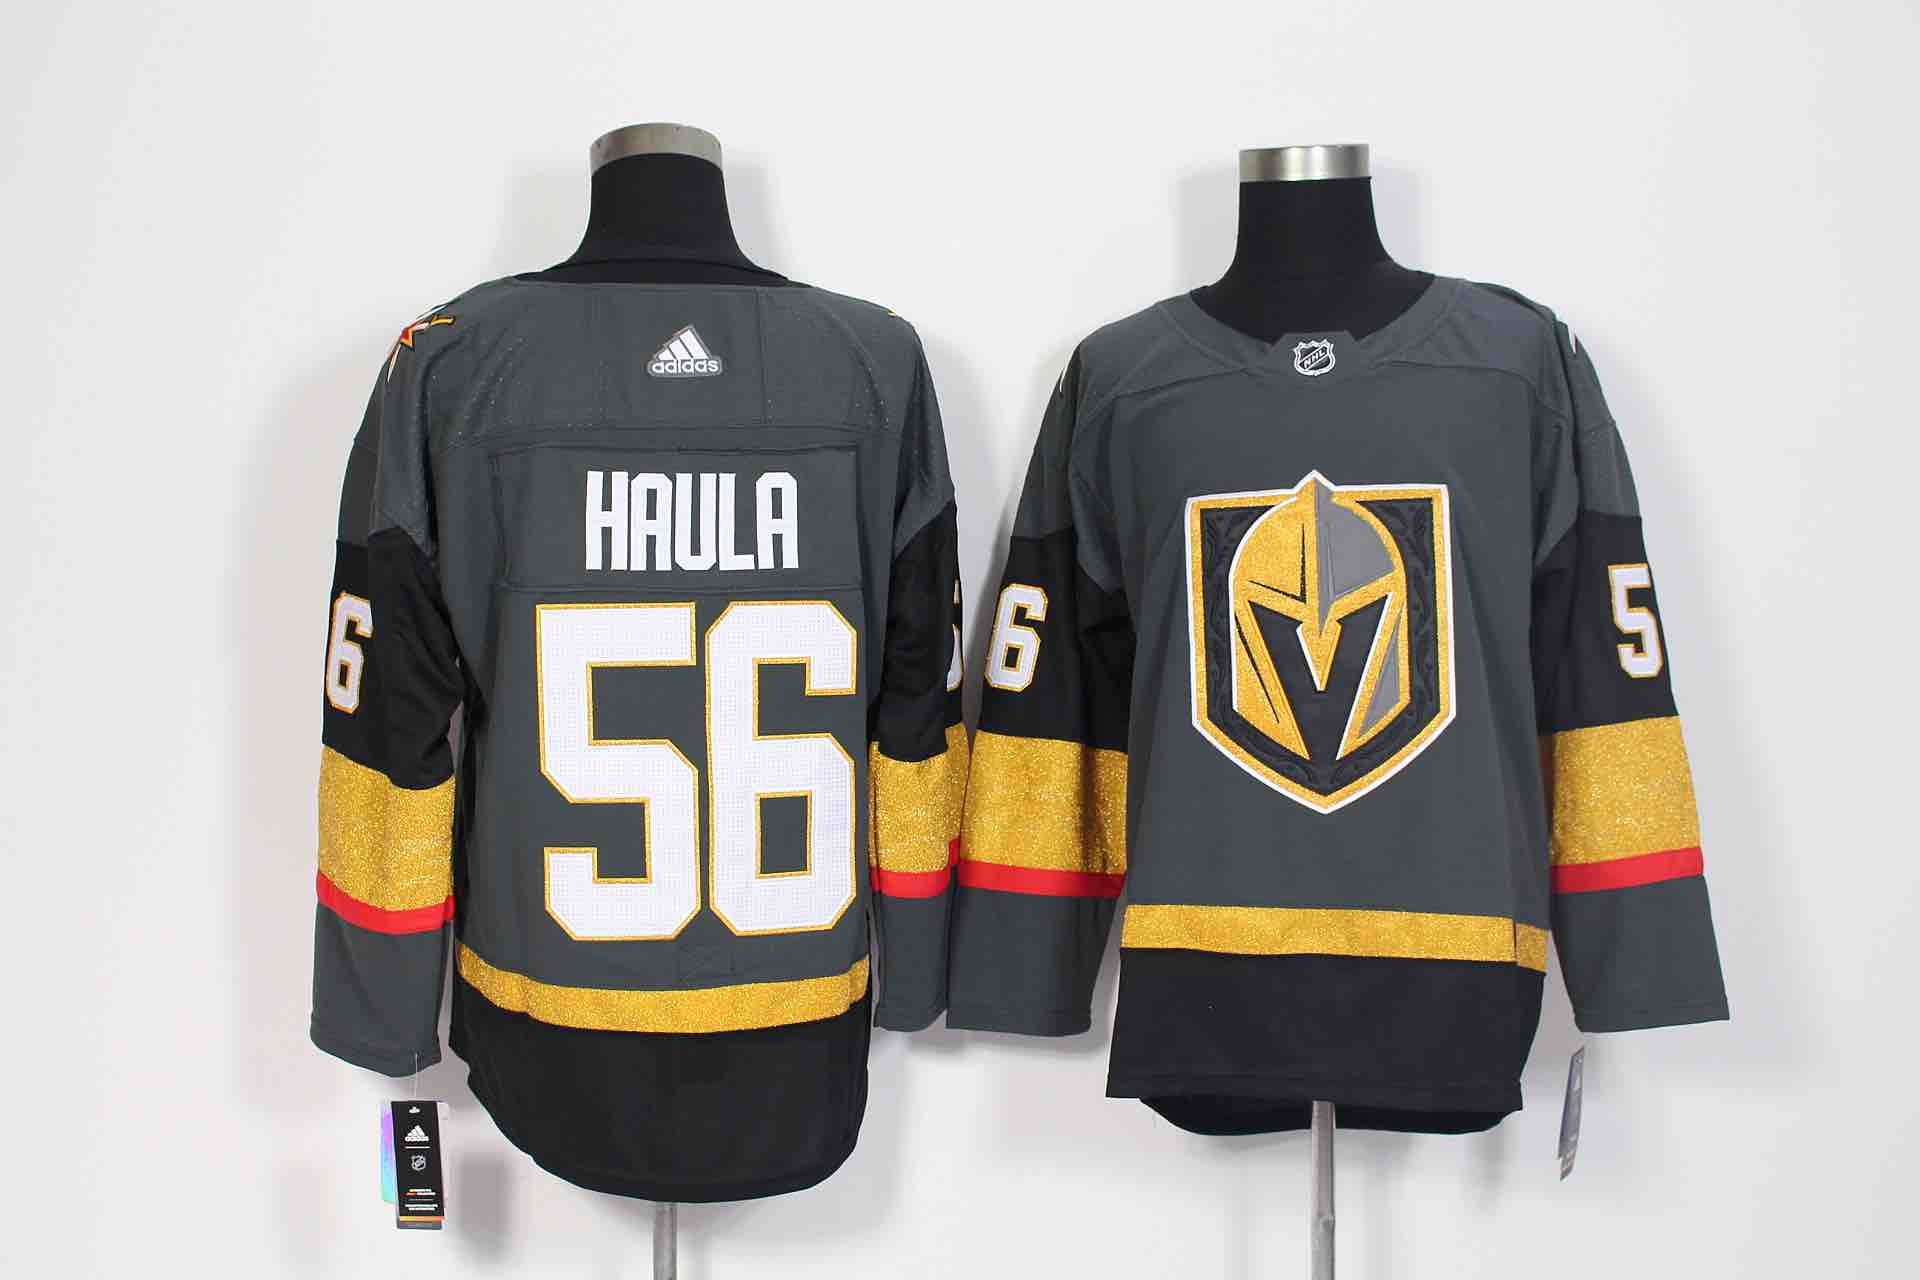 Adidas Mens Vegas Golden Knights #56 Haula Hockey Jersey